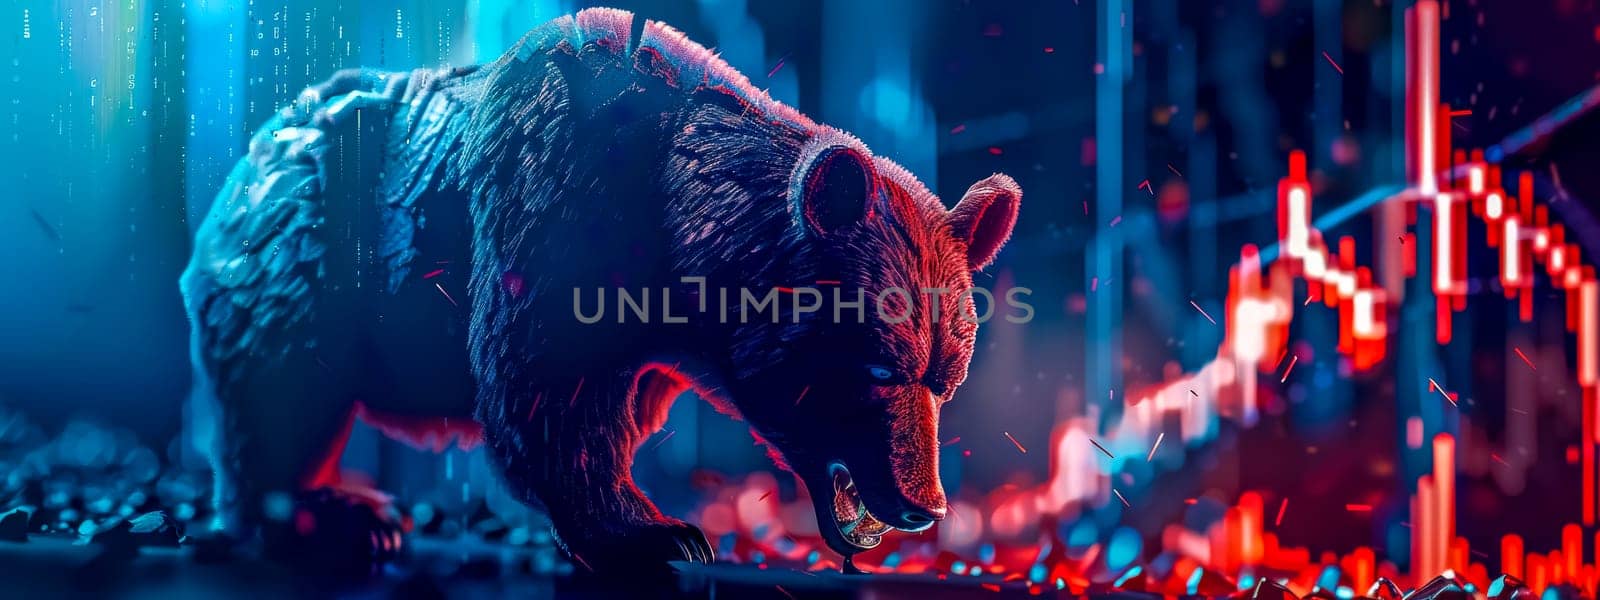 Stock market bear in colorful digital world by Edophoto